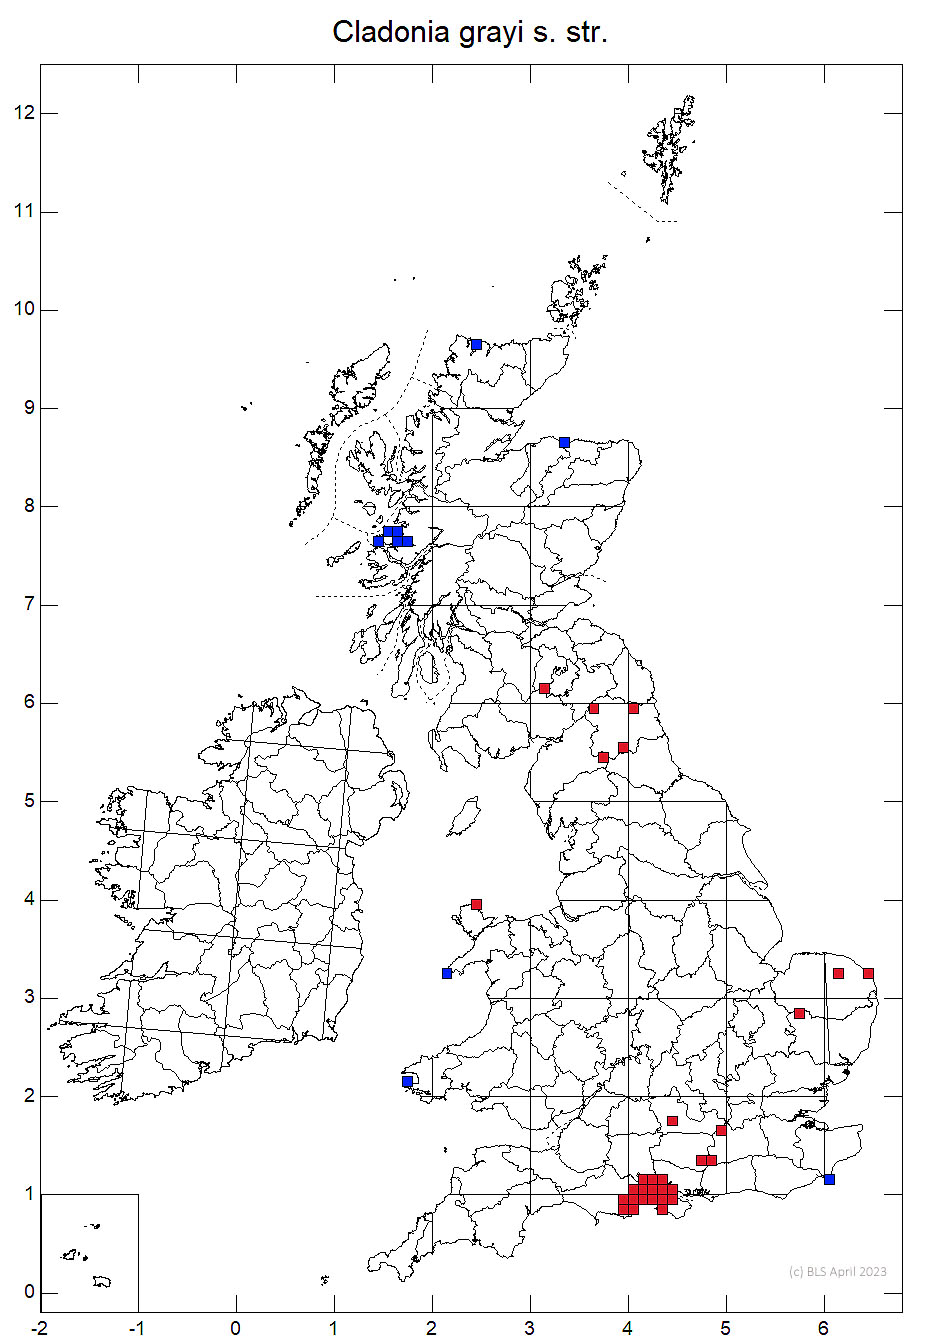 Cladonia grayi 10km sq distribution map